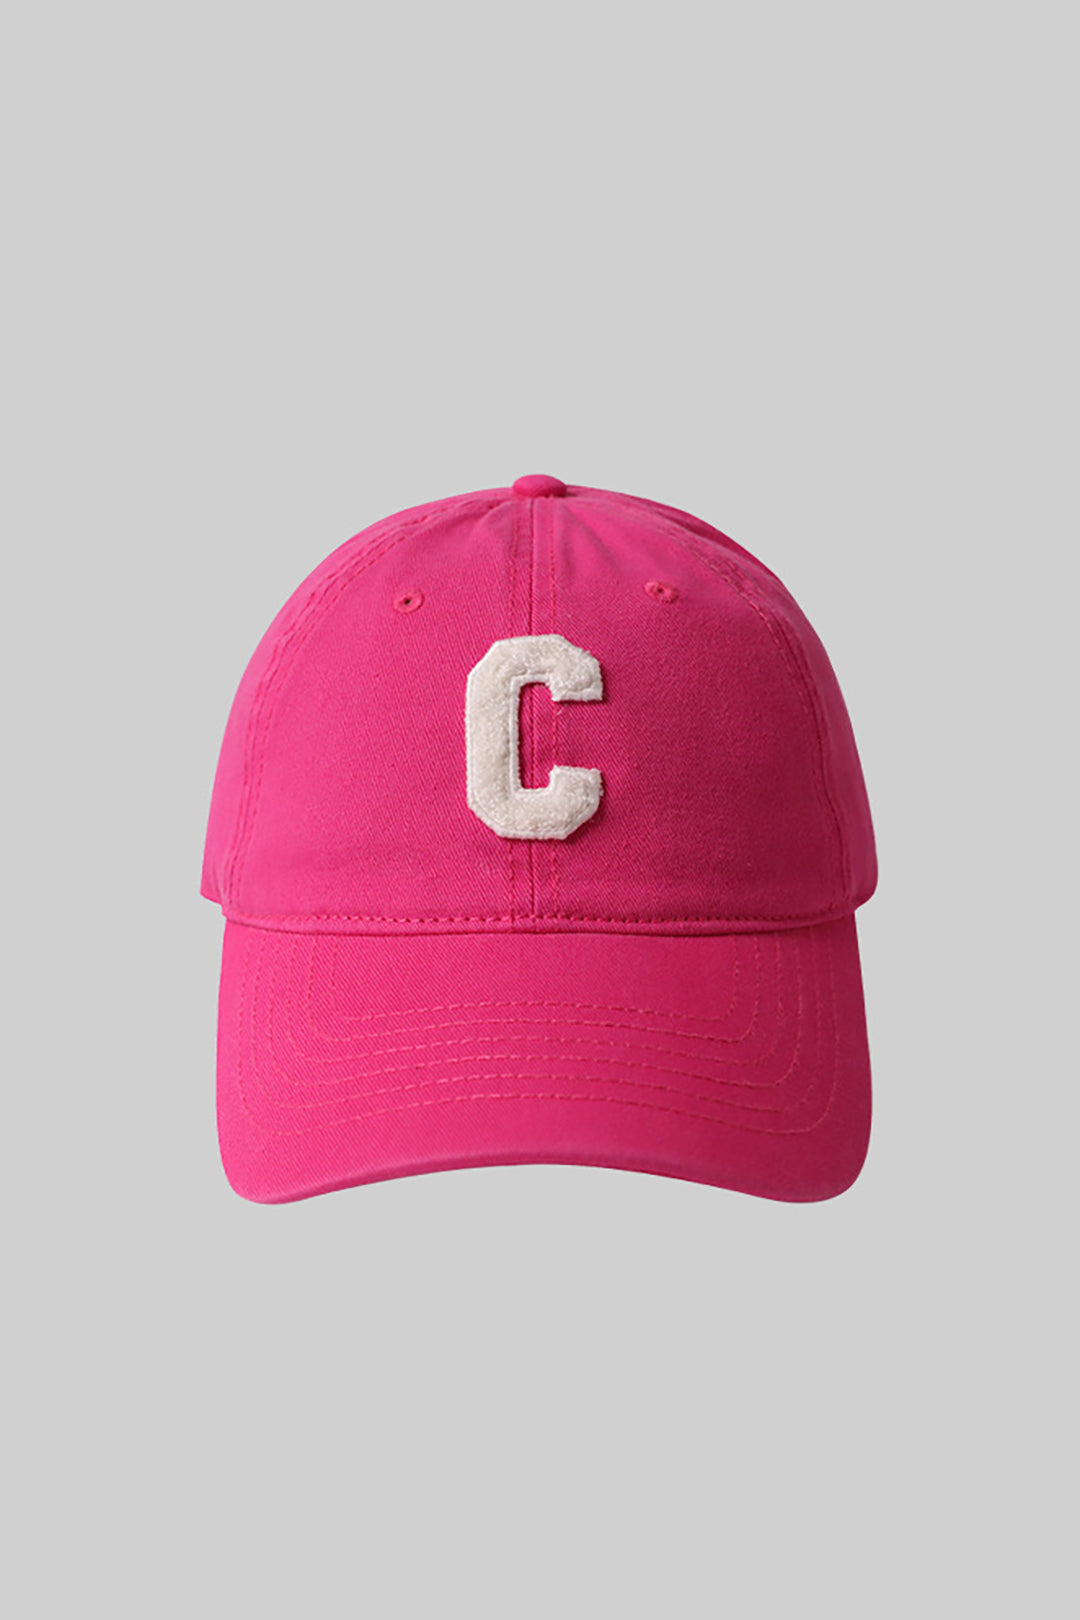 Letter C Embroidery Baseball Cap